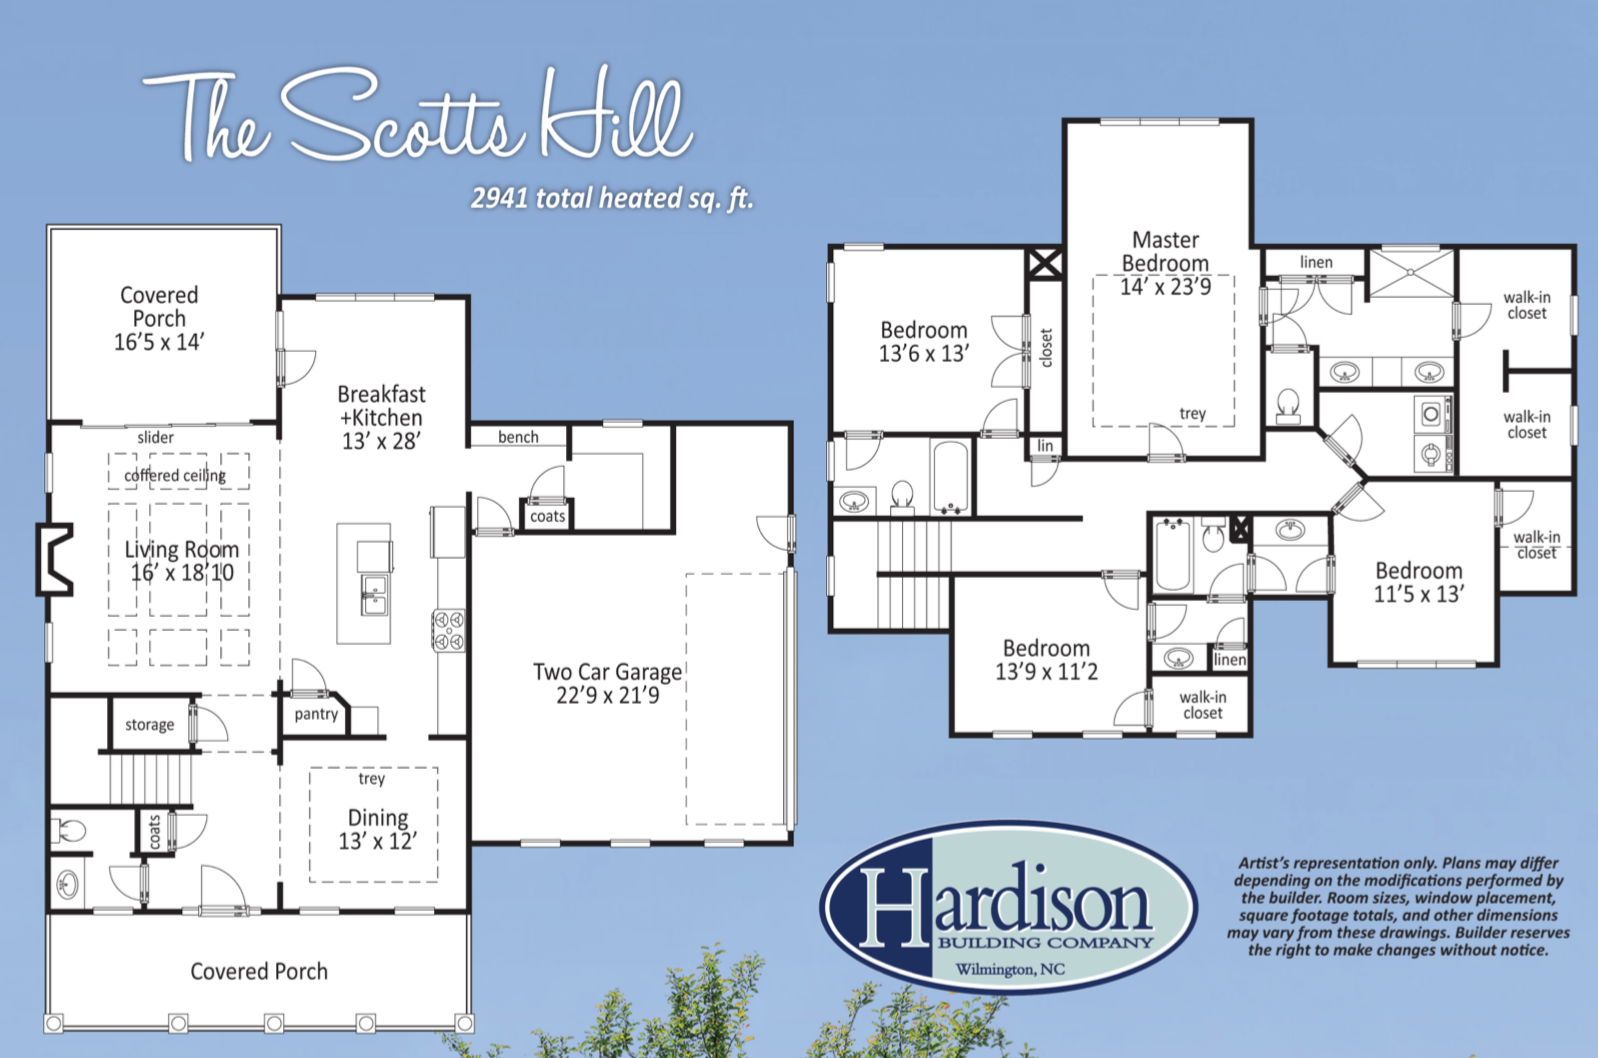 The Scotts Hill floor plan image